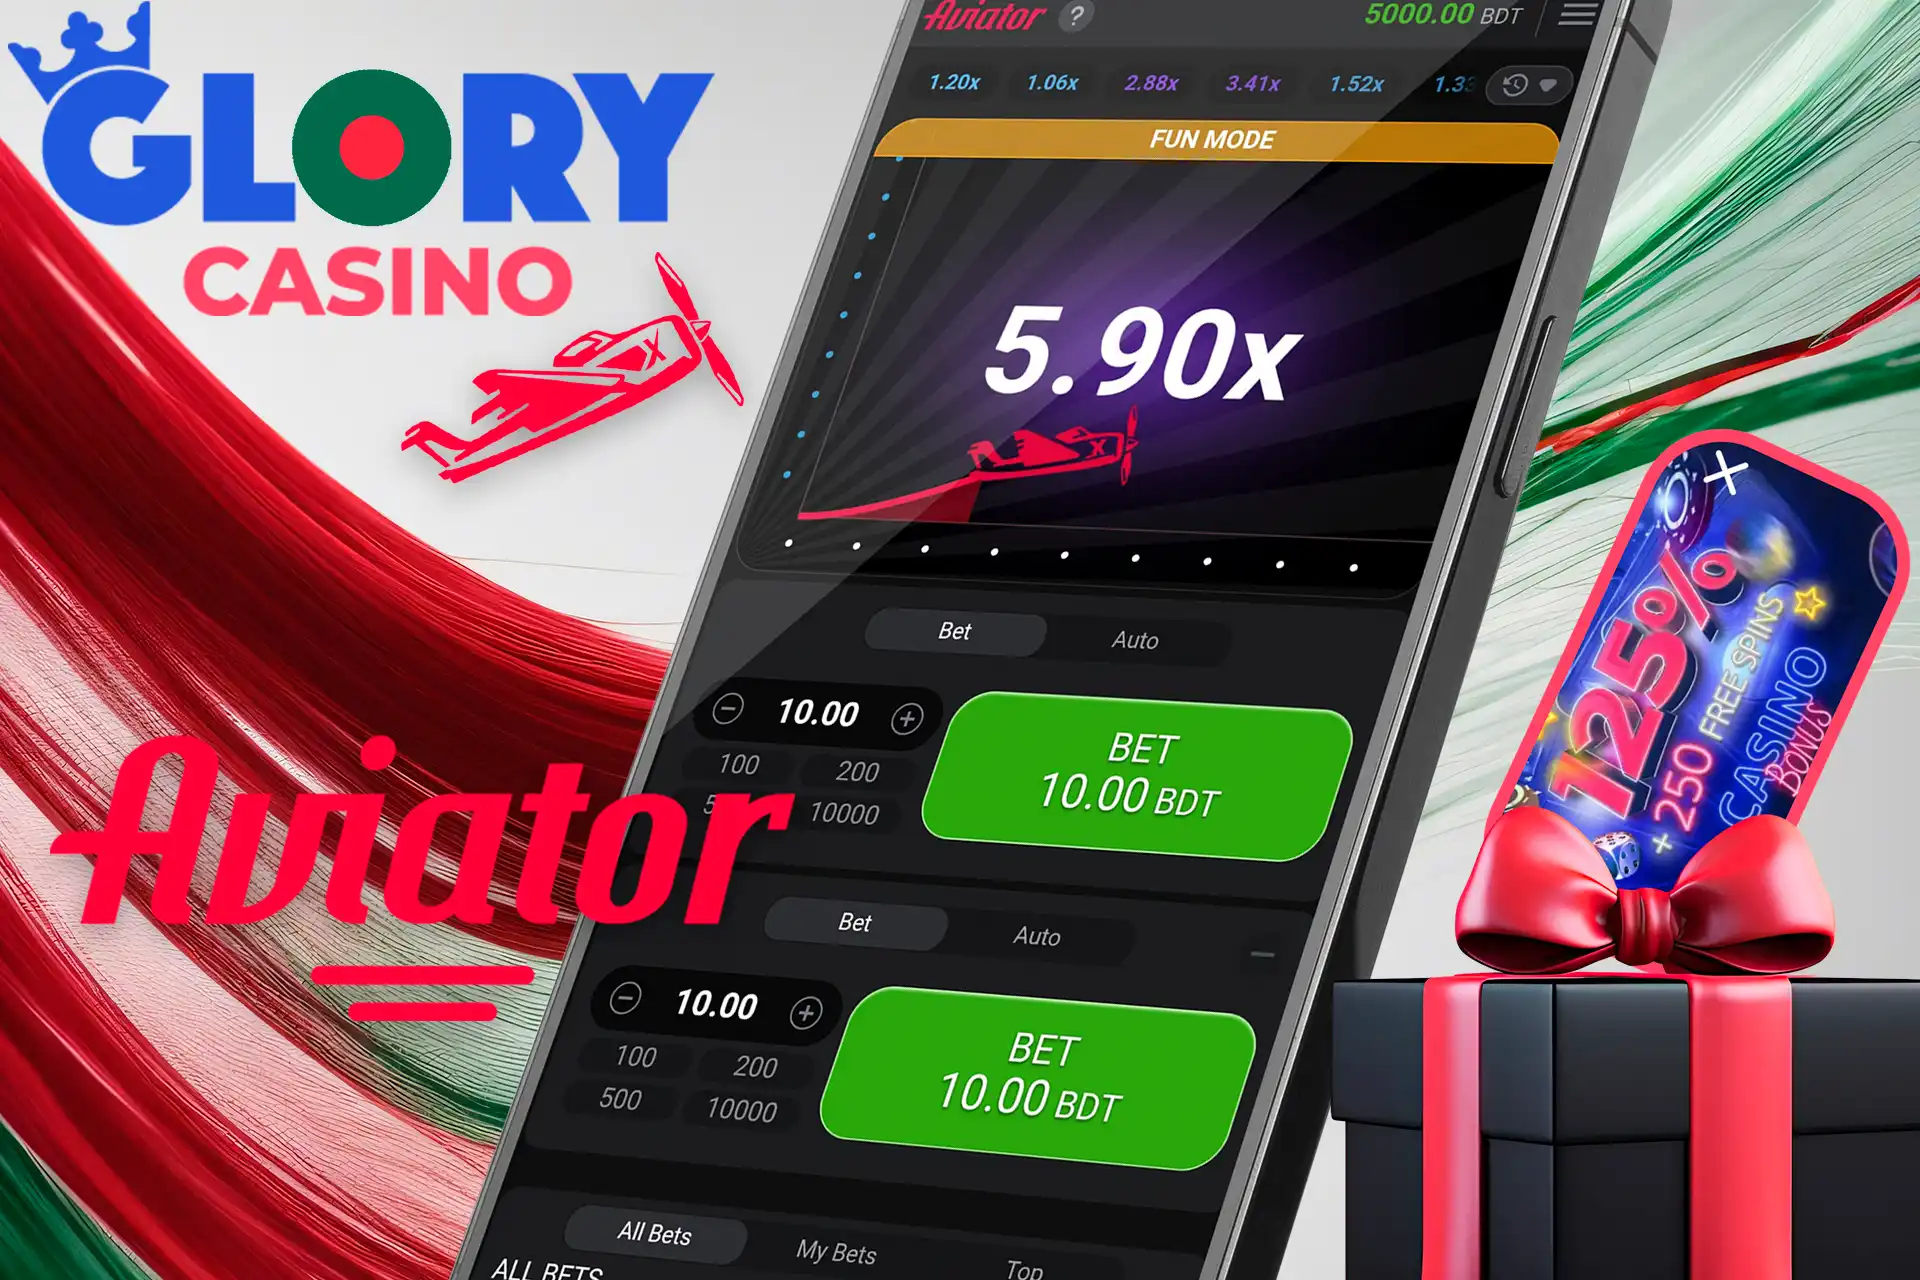 Play Aviator at Glory Casino Bangladesh and receive a generous welcome bonus